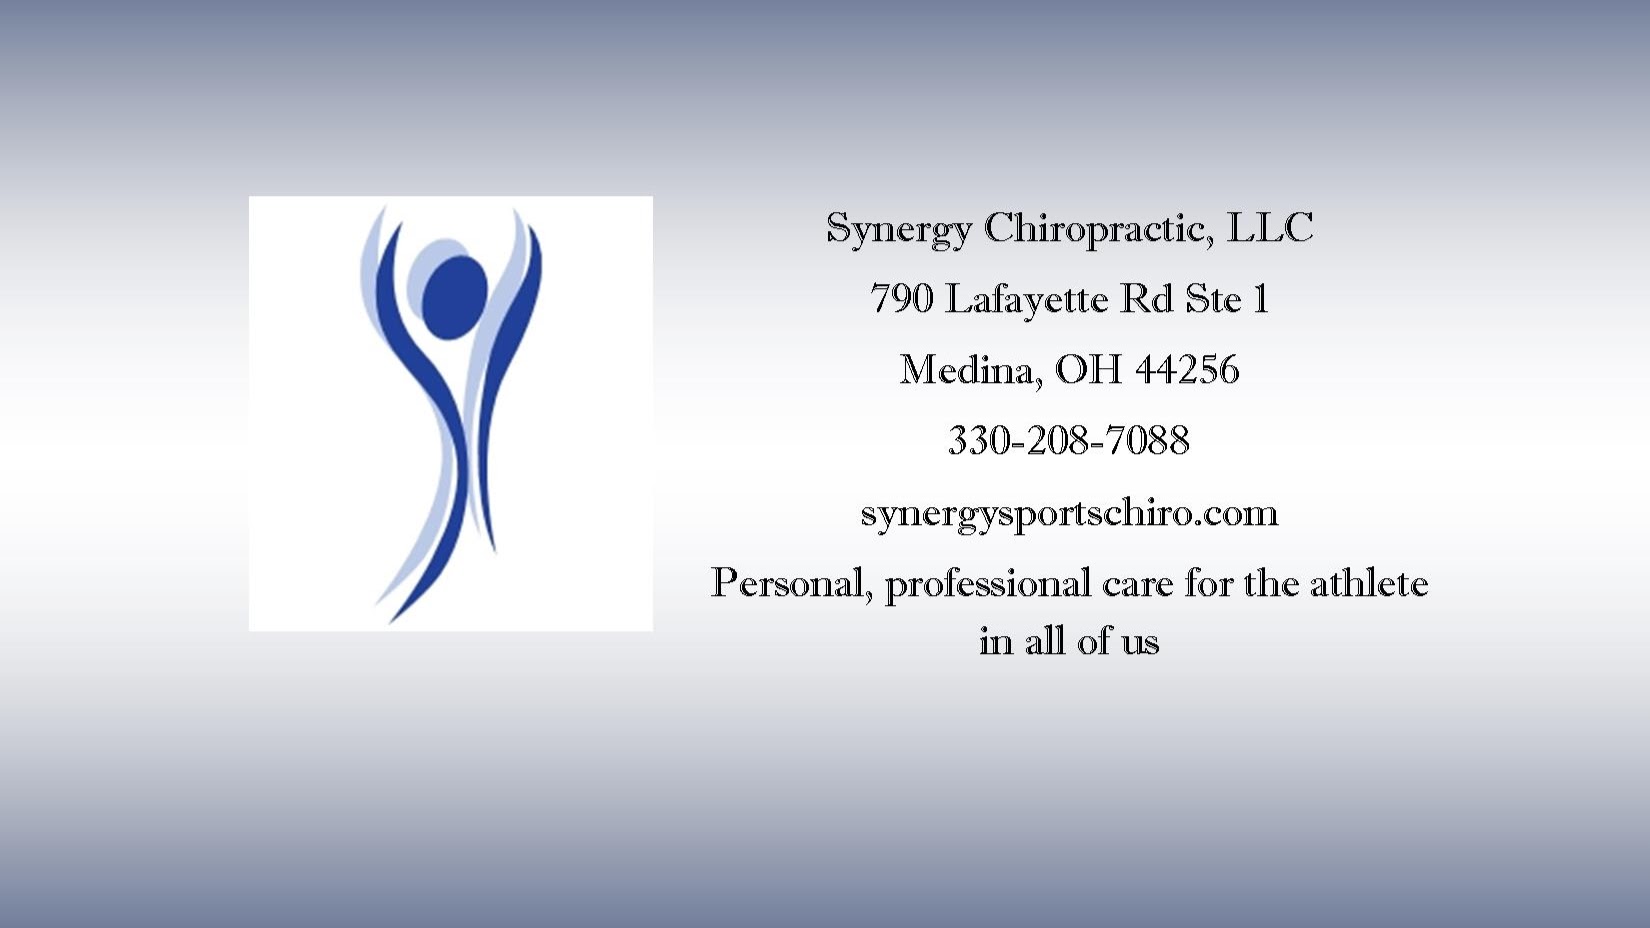 Synergy Chiropractic, LLC